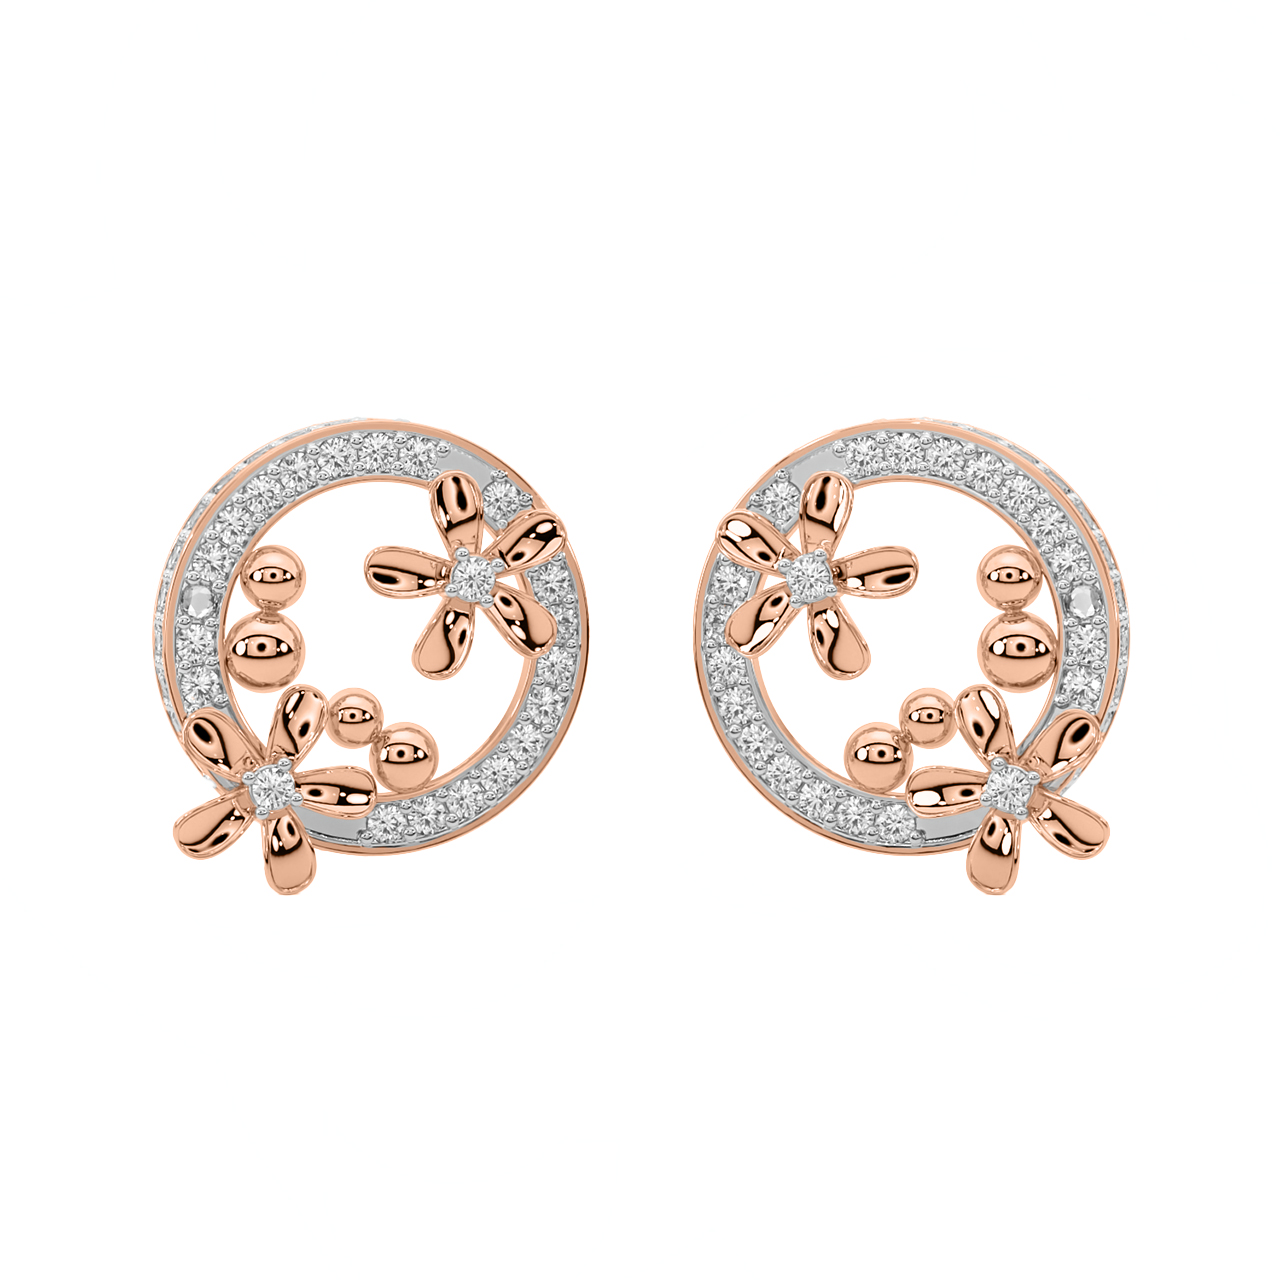 Floral Enigma Diamond Earrings